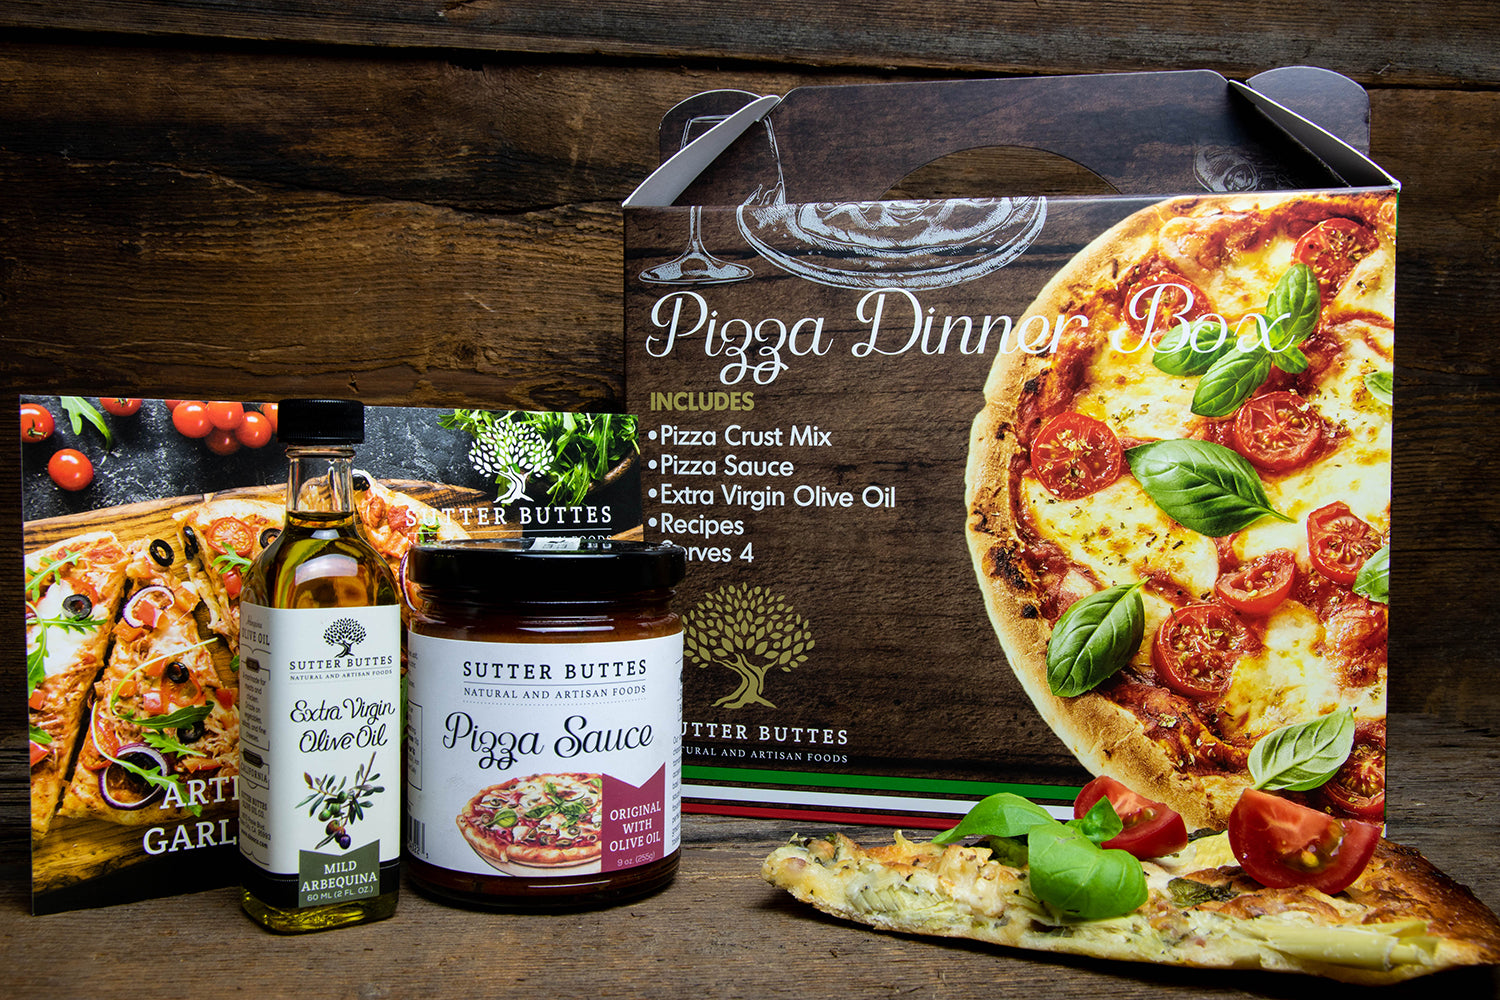 Sutter Buttes Pizza Dinner Box Kit - Olive Oil Etcetera 